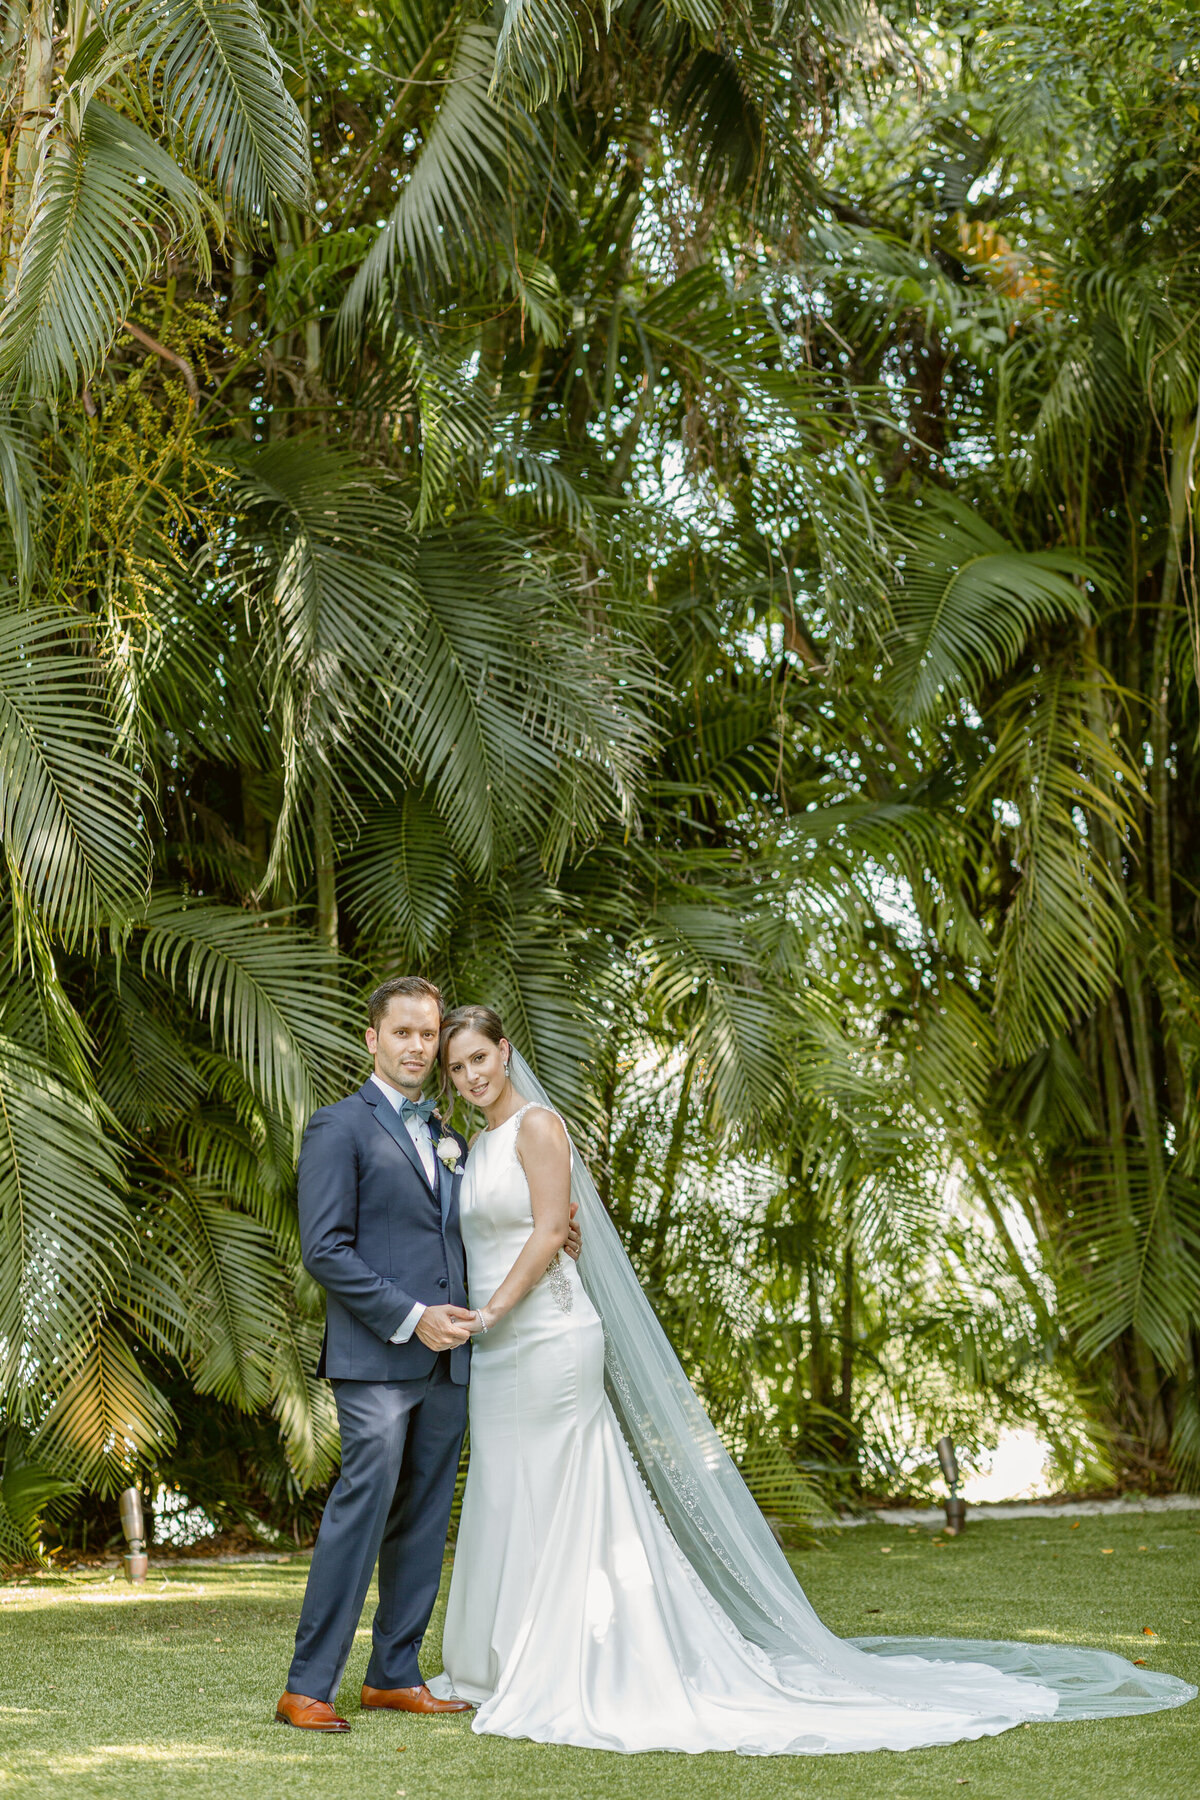 Wedding at Kilian Palms Country Club in Miami, Florida 31